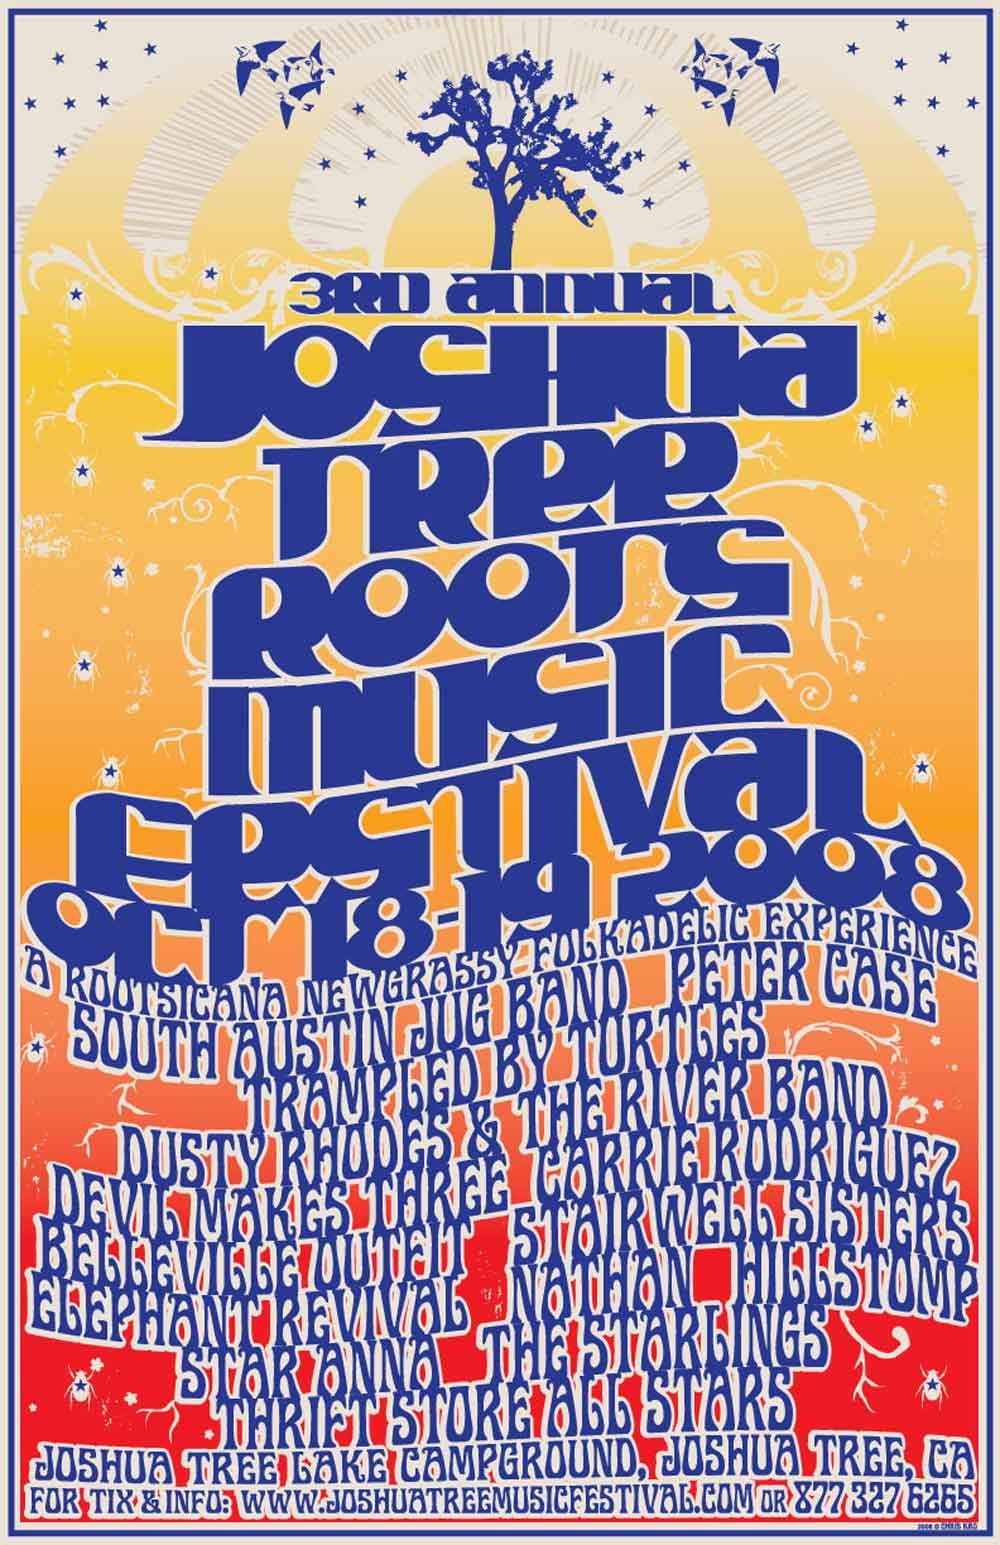 Fall Joshua Tree Music Festival 2008 Lineup poster image